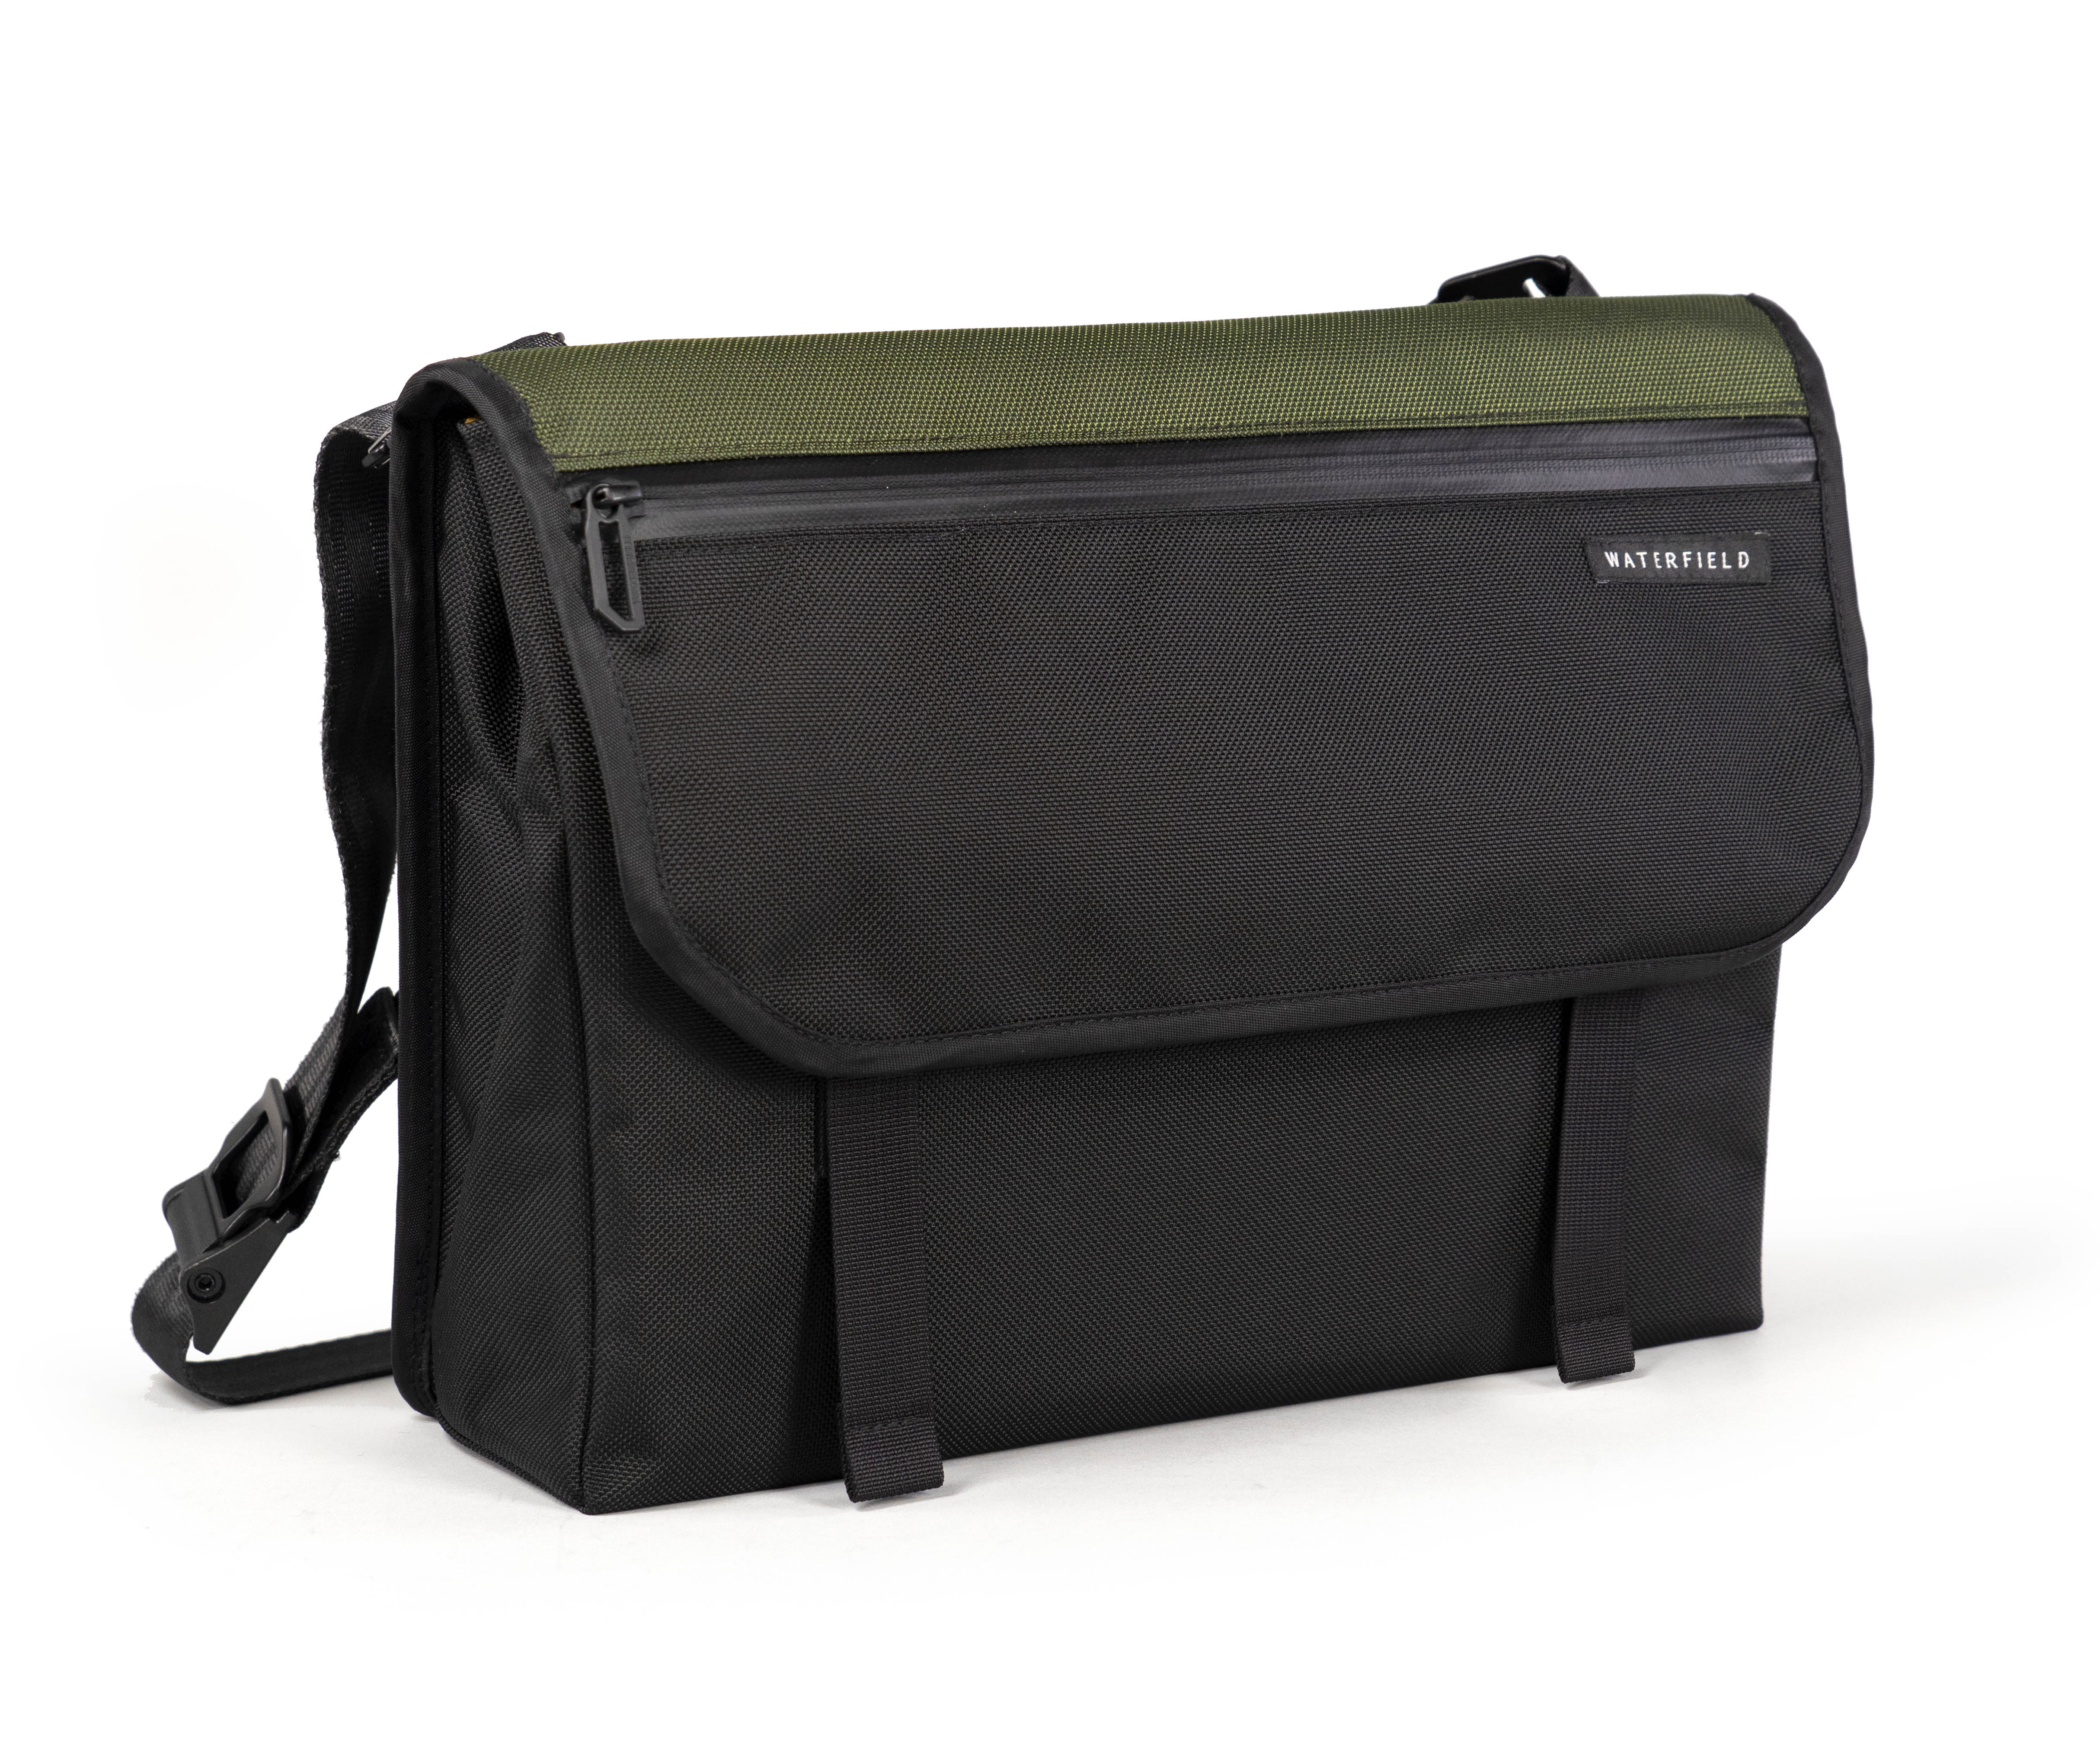 The Essential Messenger Laptop Bag